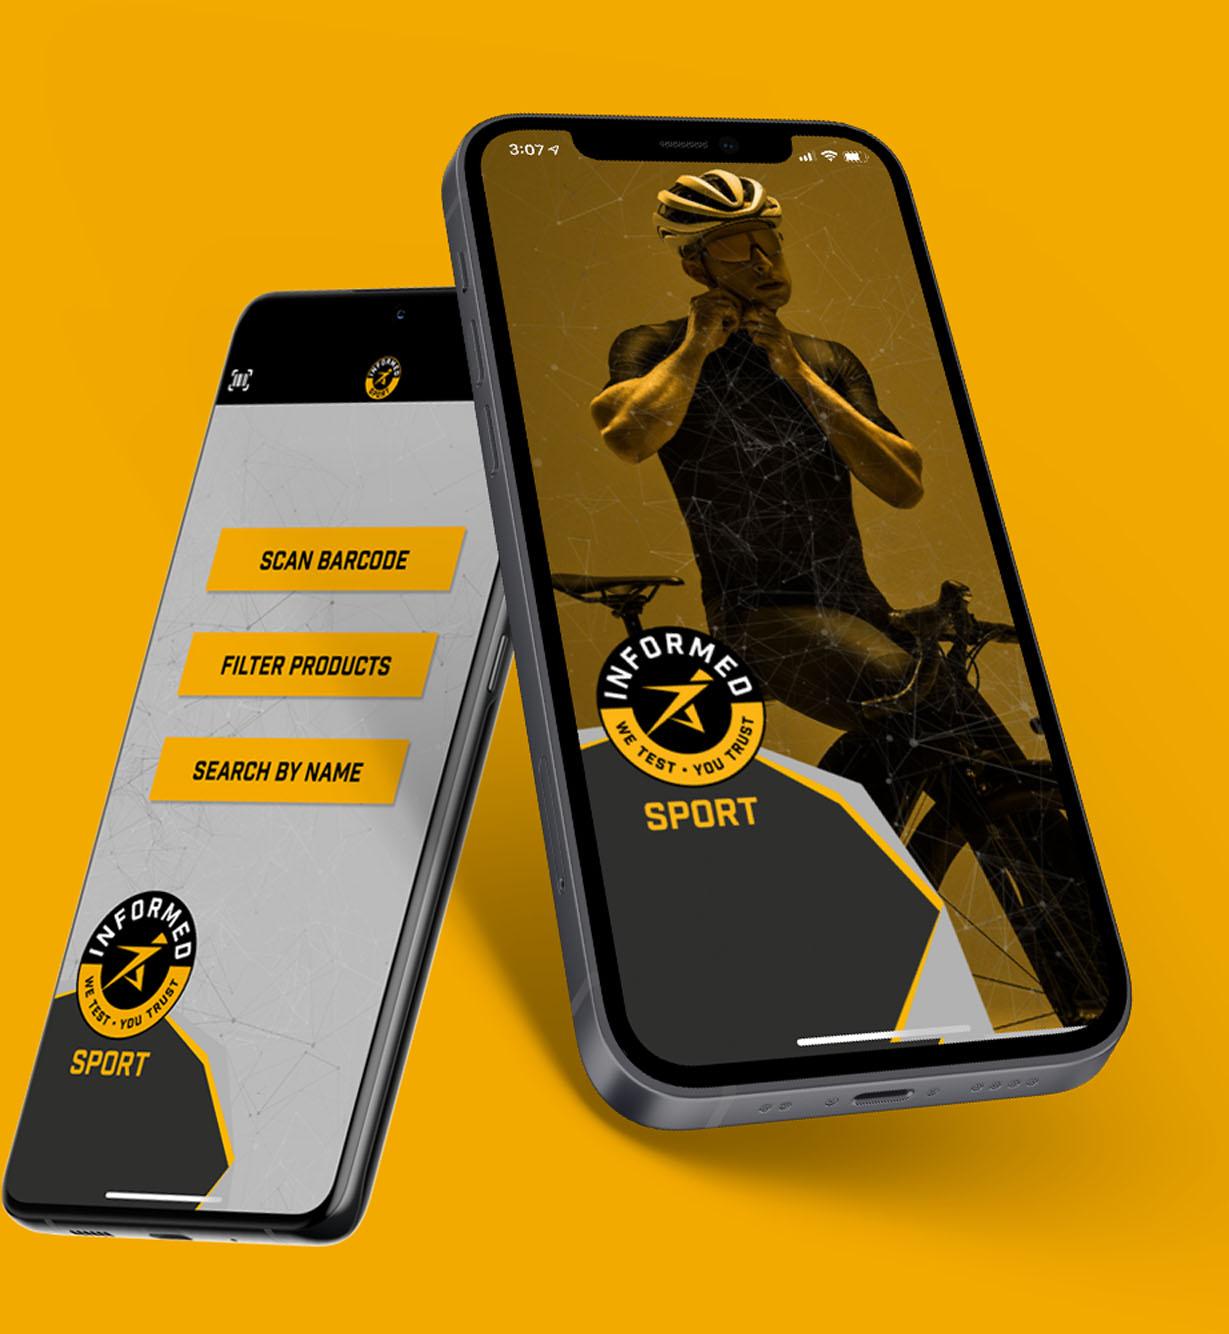 Informed Sport App displayed on phone